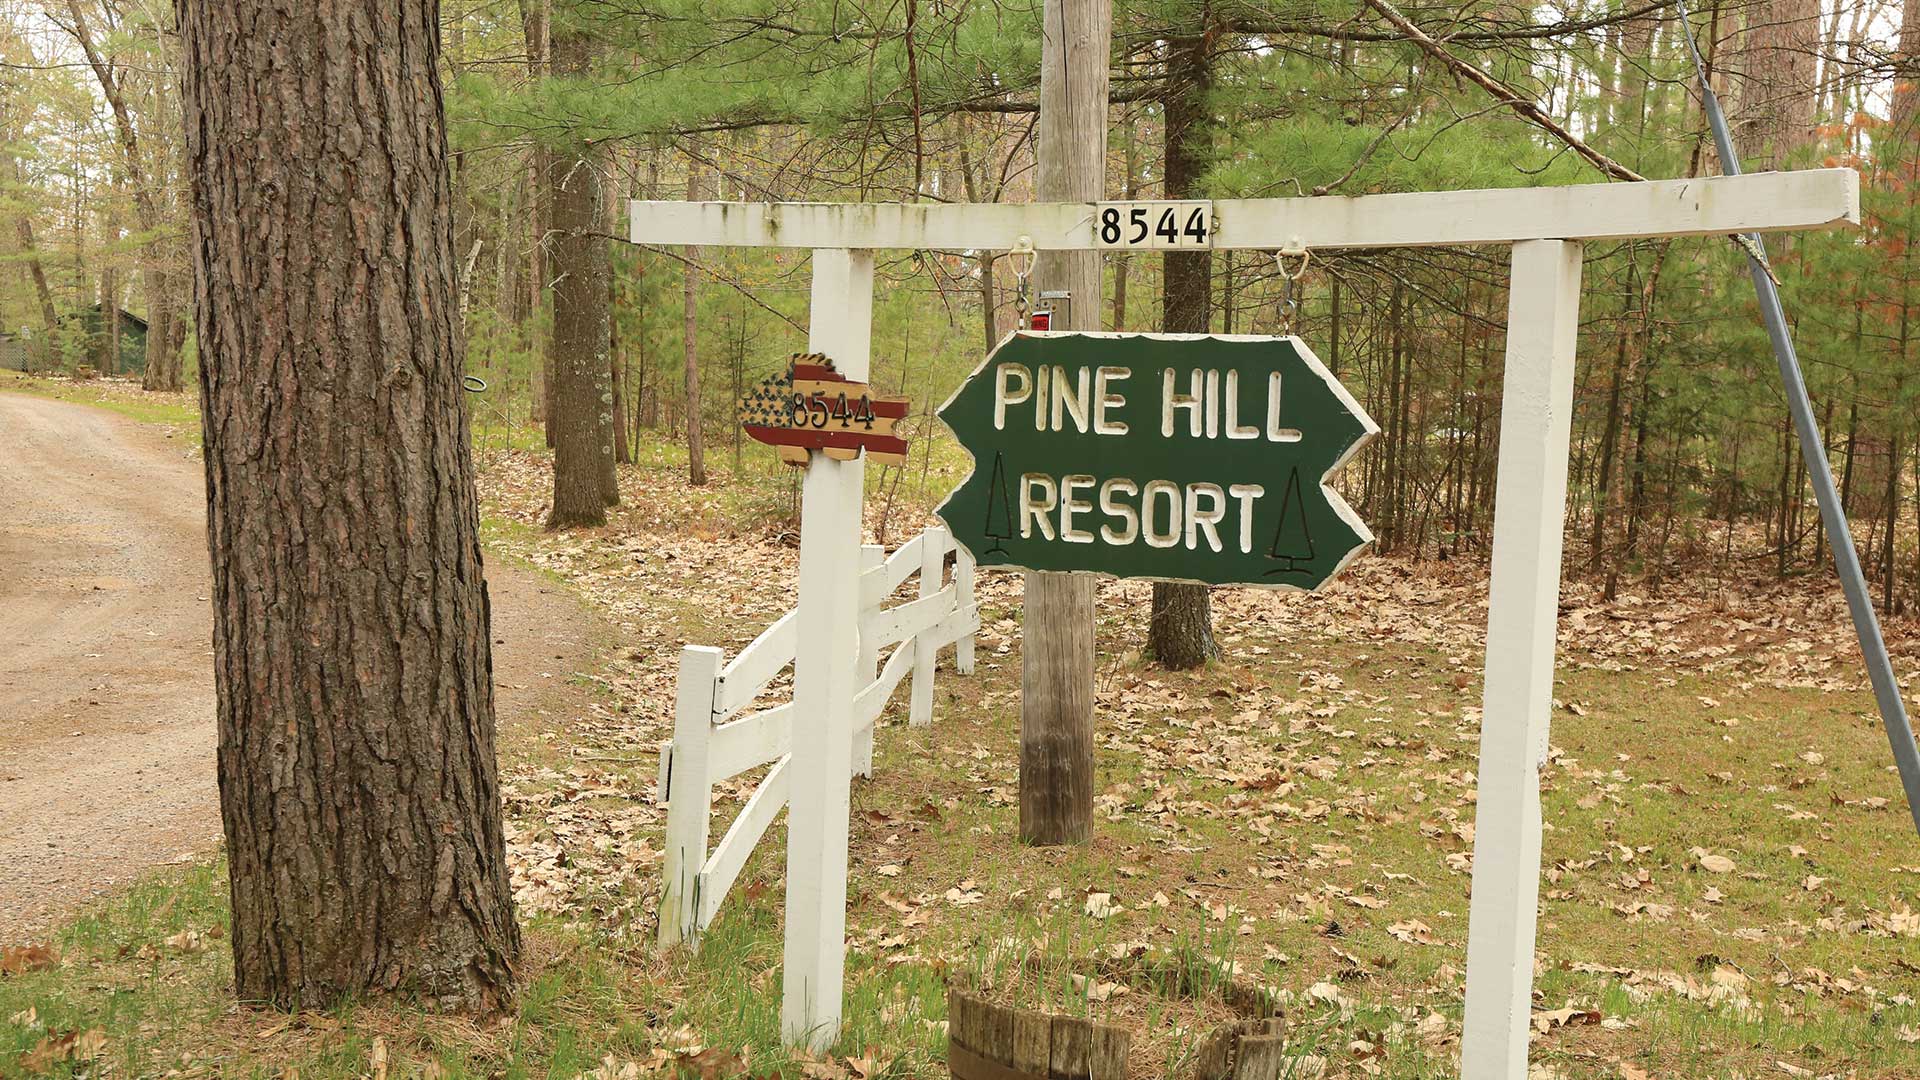 Pine Hill Resort sign